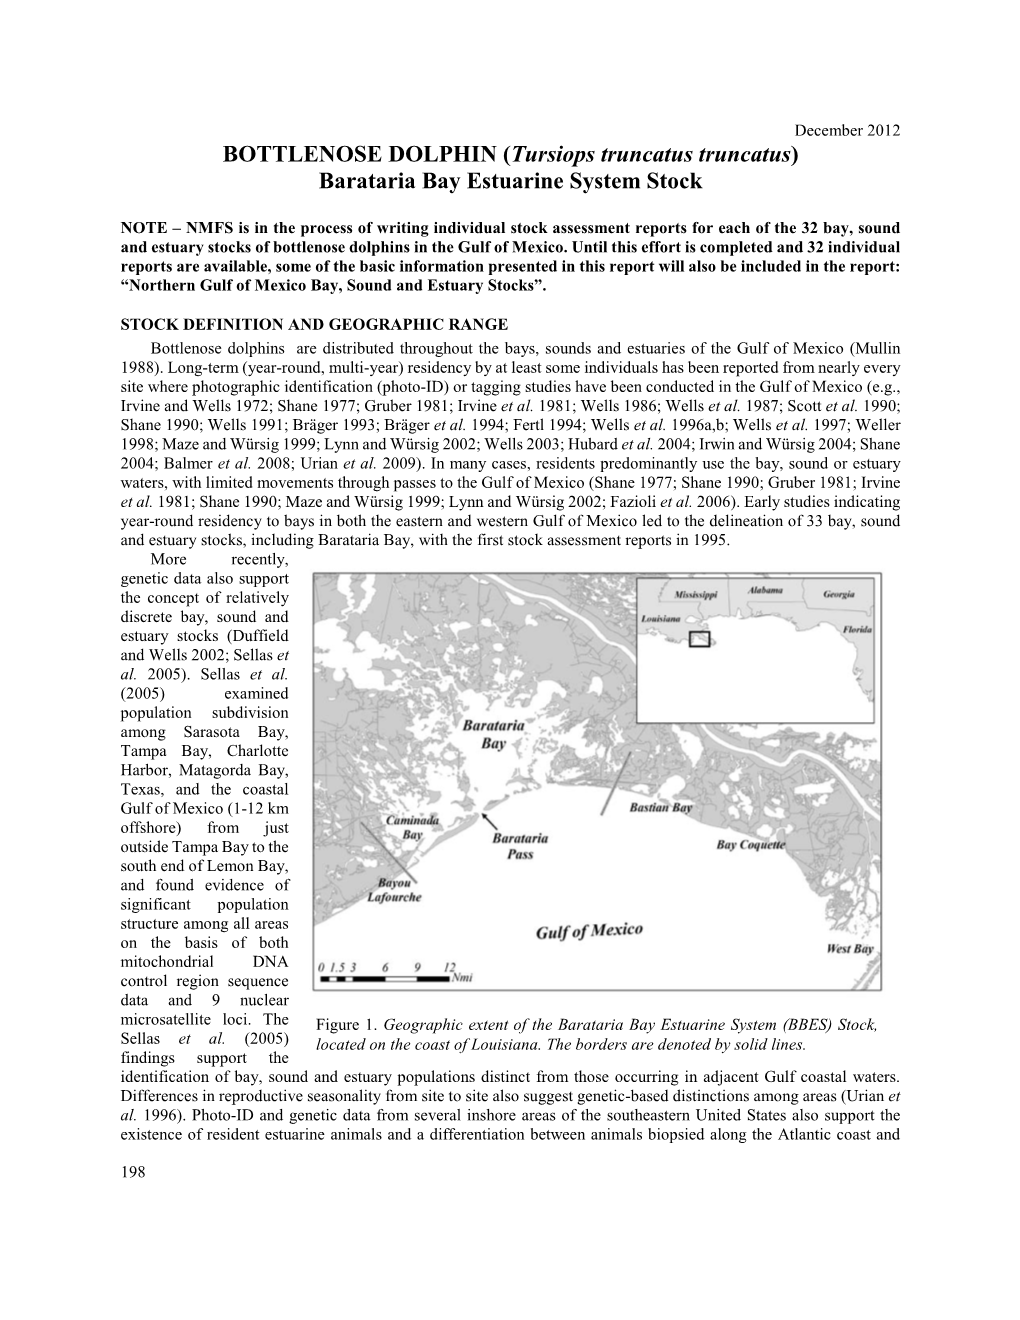 2012 BOTTLENOSE DOLPHIN (Tursiops Truncatus Truncatus) Barataria Bay Estuarine System Stock Report